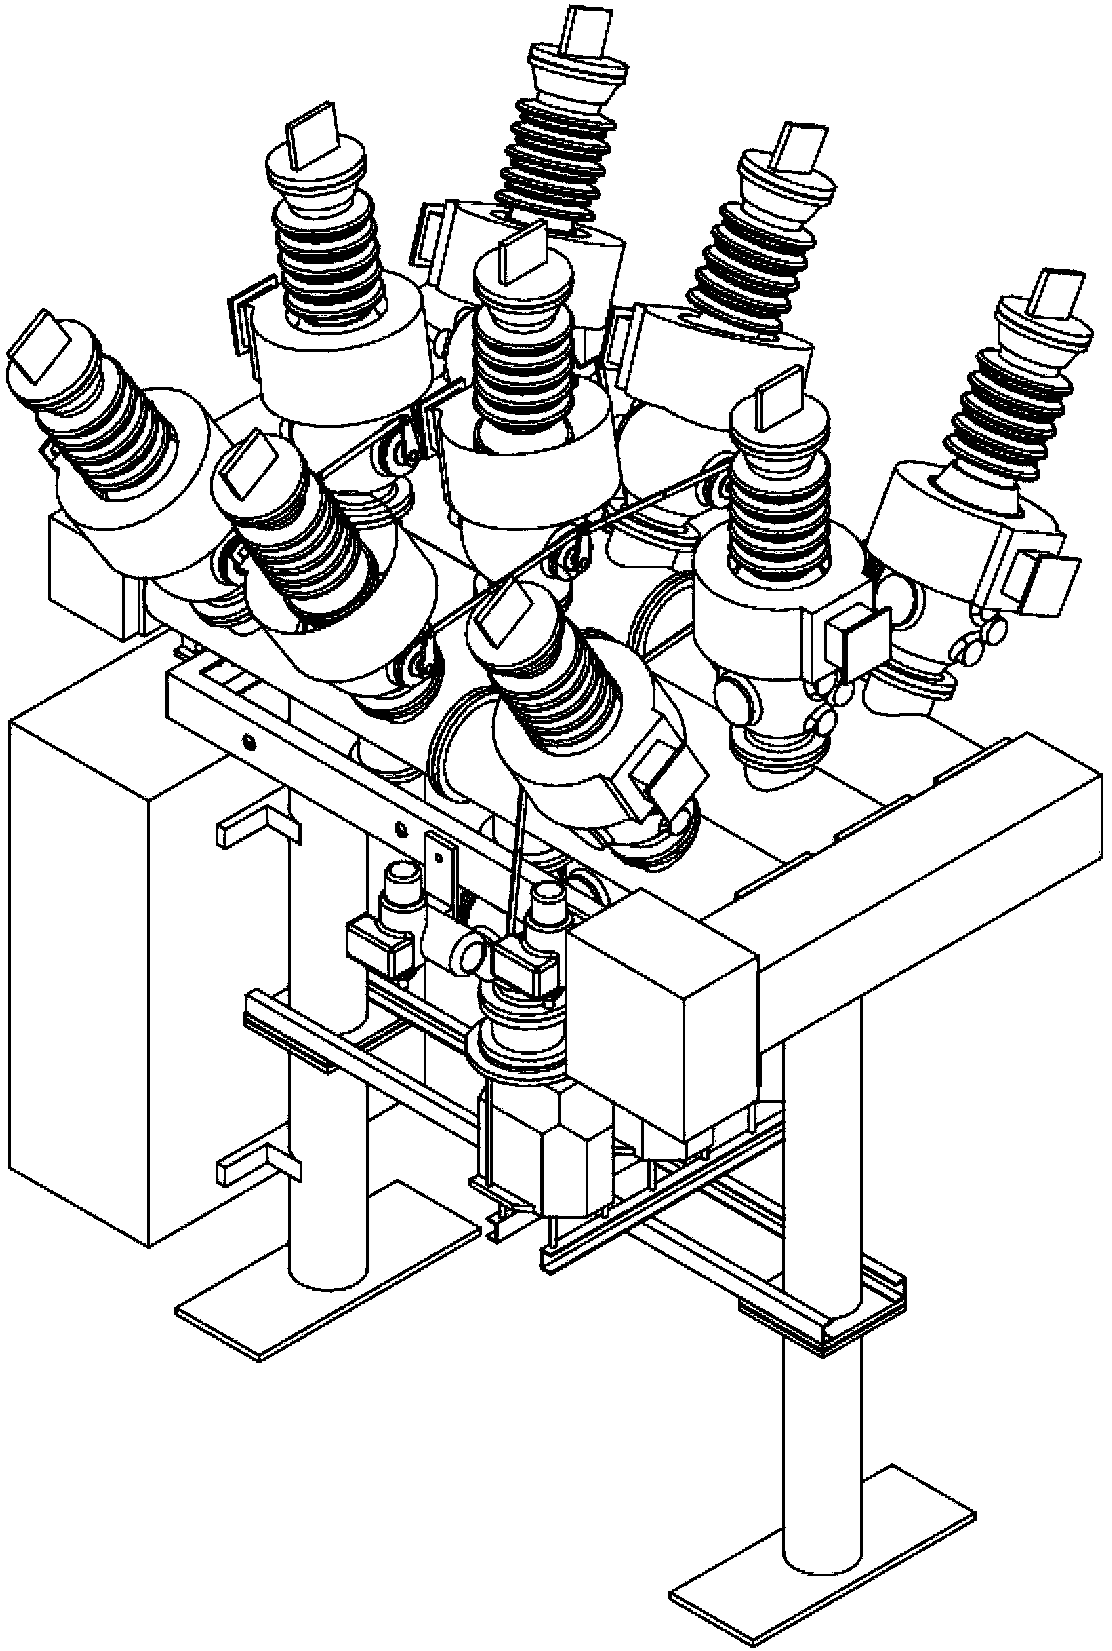 Double-breaker DCB type high-voltage composite apparatus